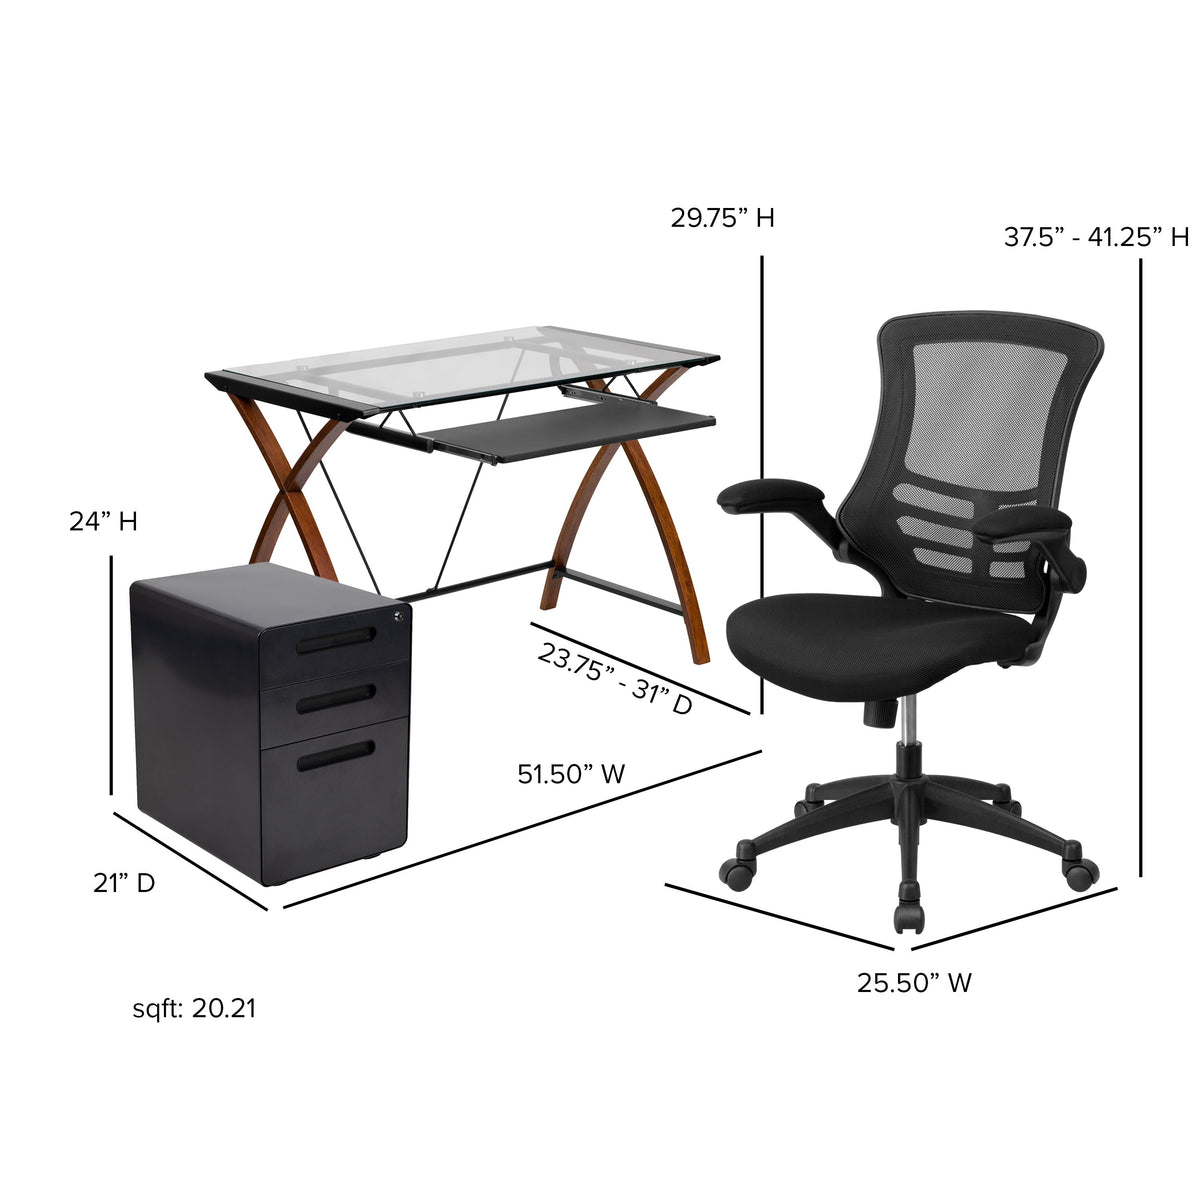 3PC Office Set-Glass Computer Desk, Ergonomic Mesh Office Chair, Filing Cabinet